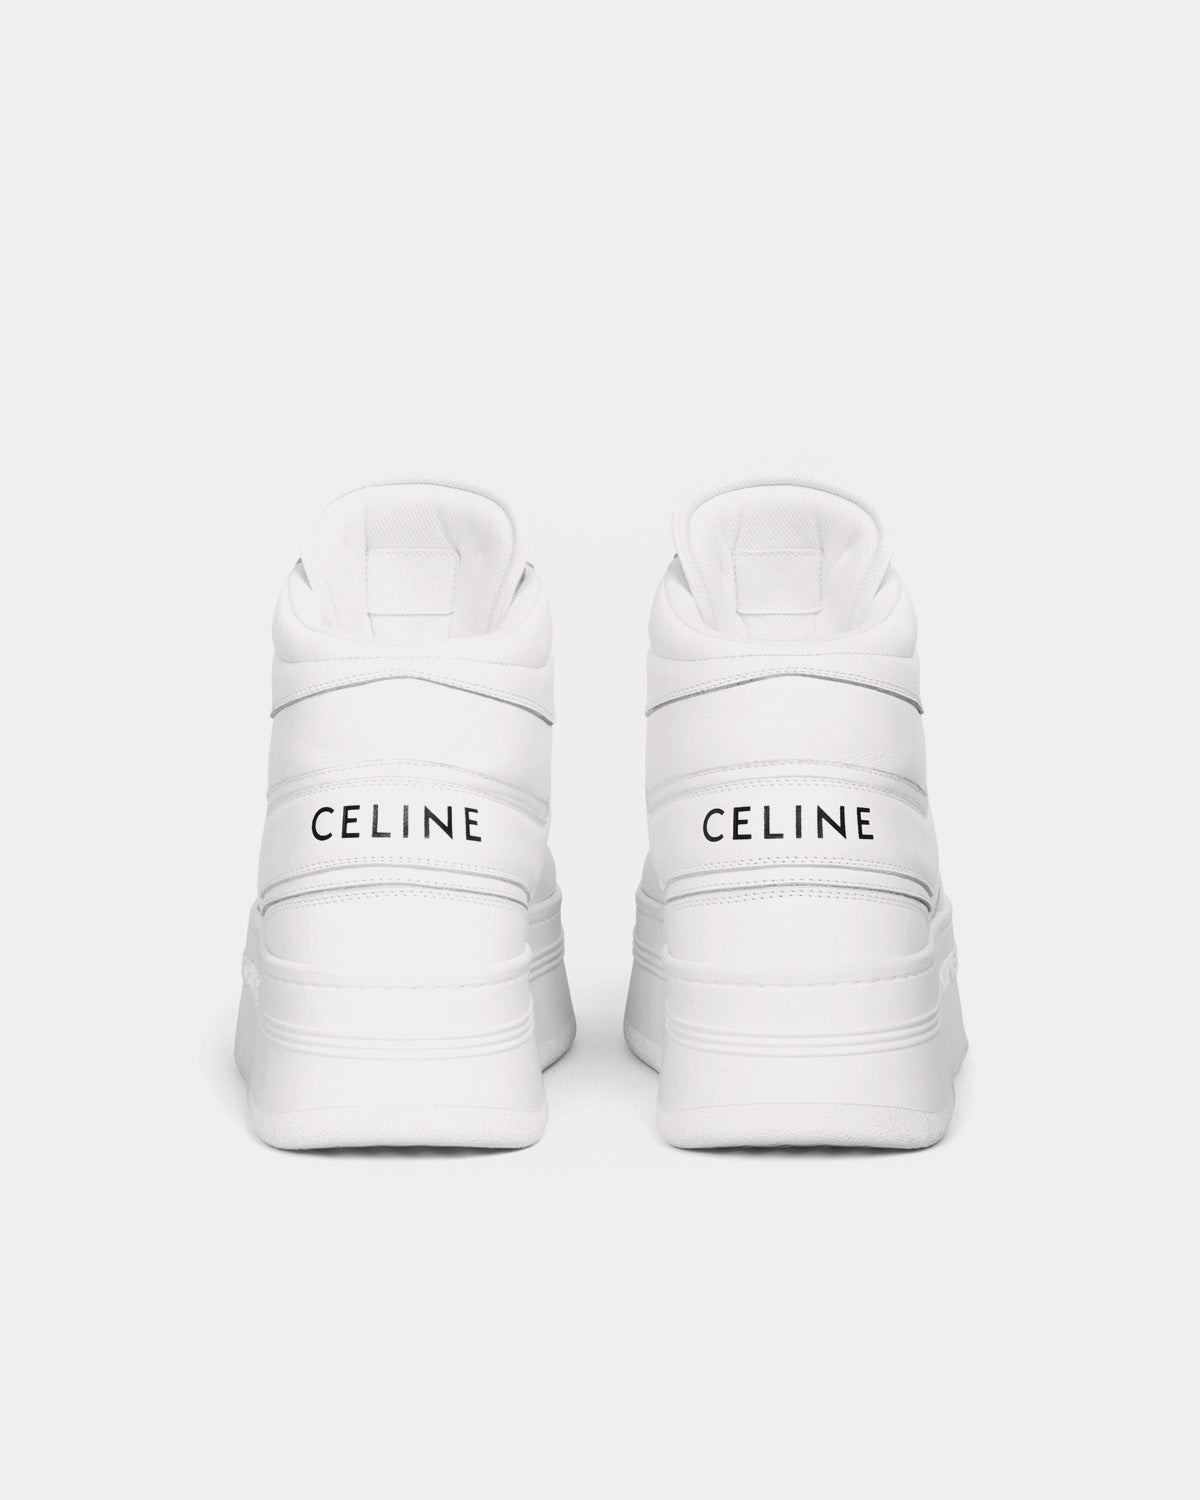 Celine - Block with Wedge Optic White Mid Top Sneakers